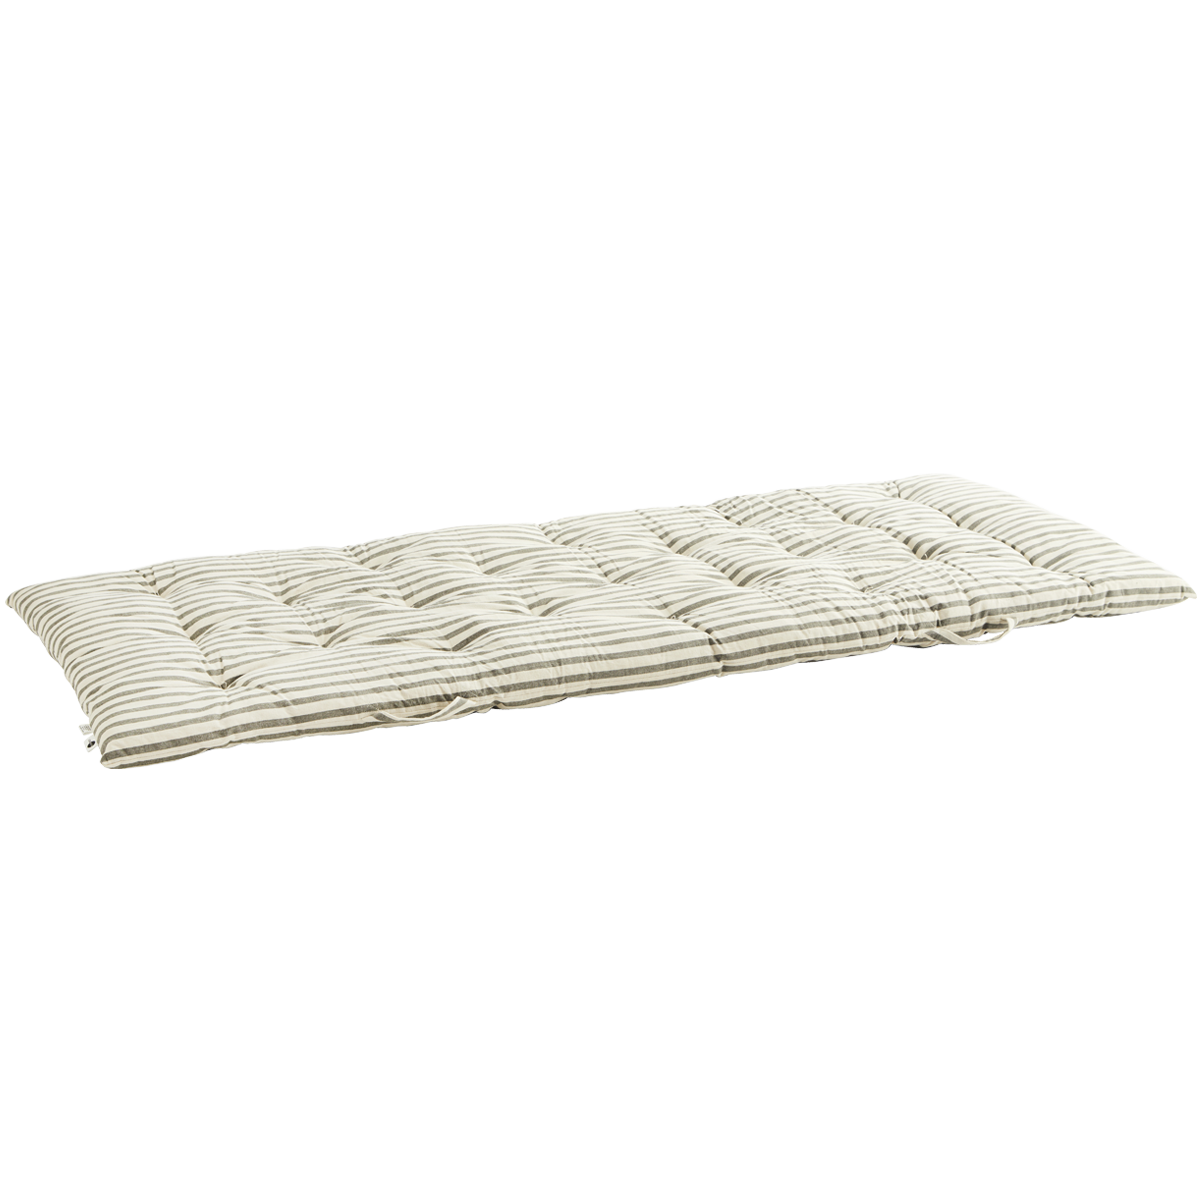 Striped cotton mattress